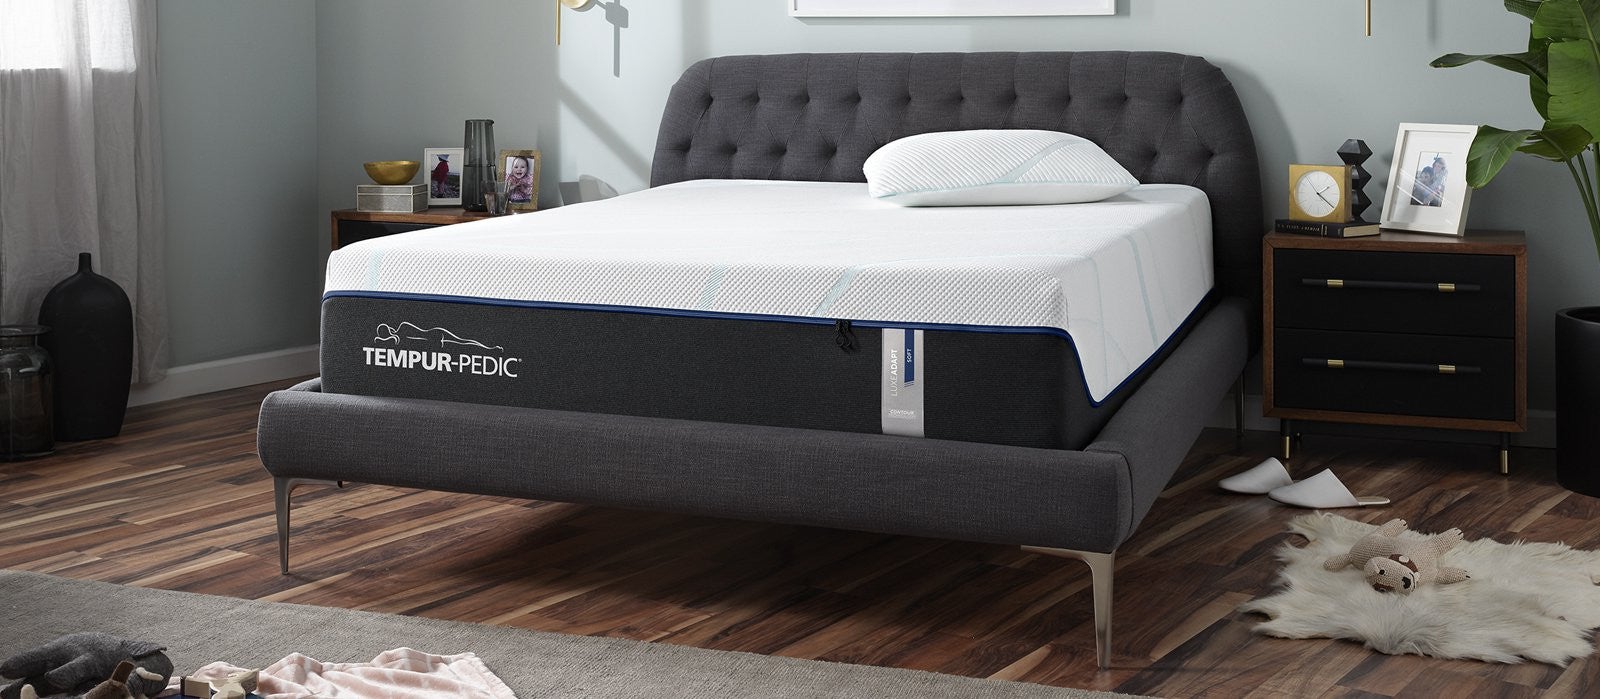 is tempur pedic still the best mattress